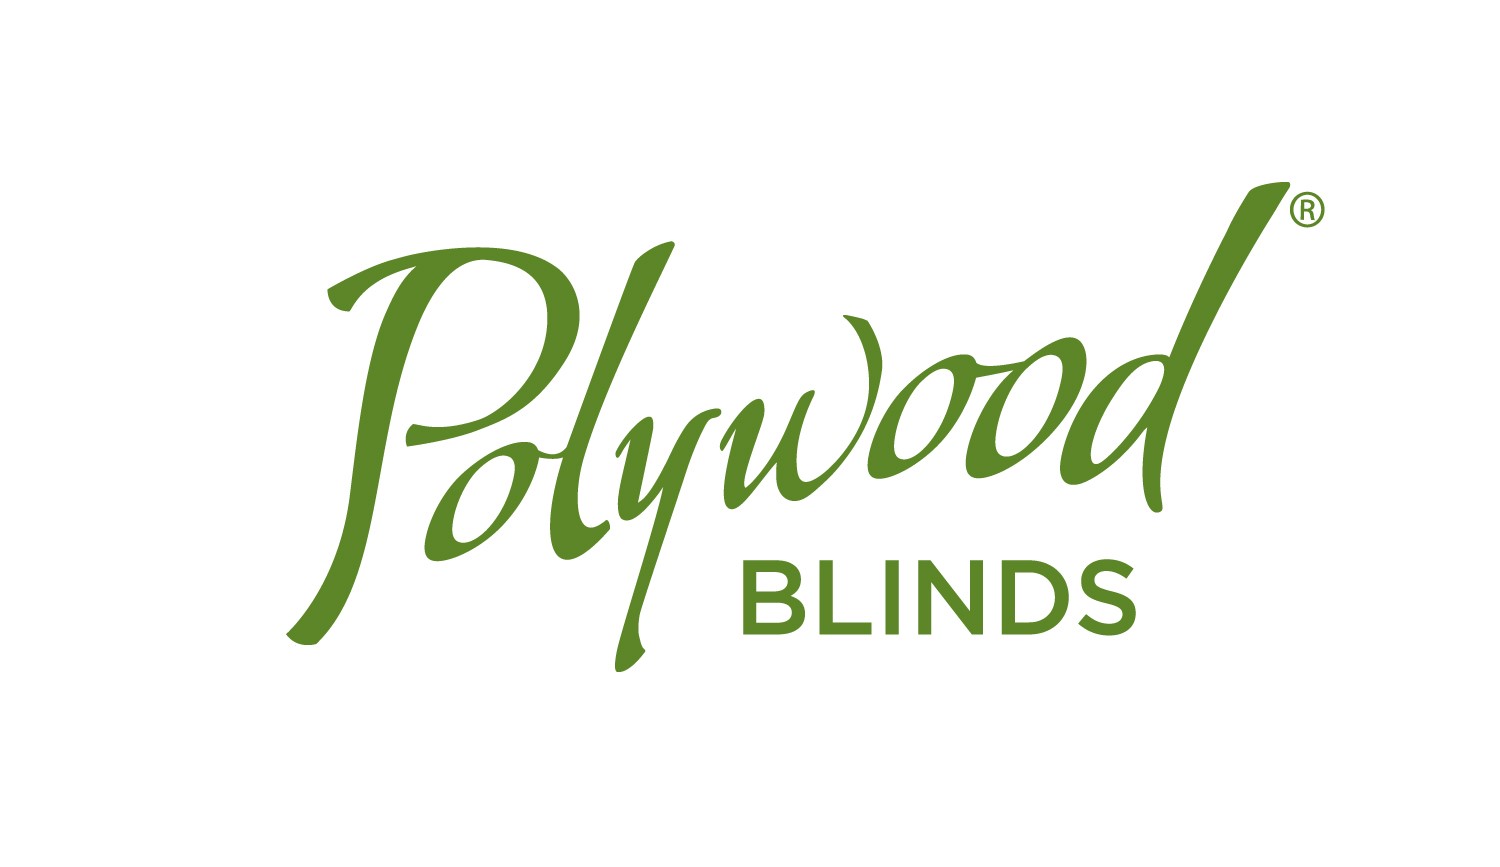 Faux Wood Blinds logo